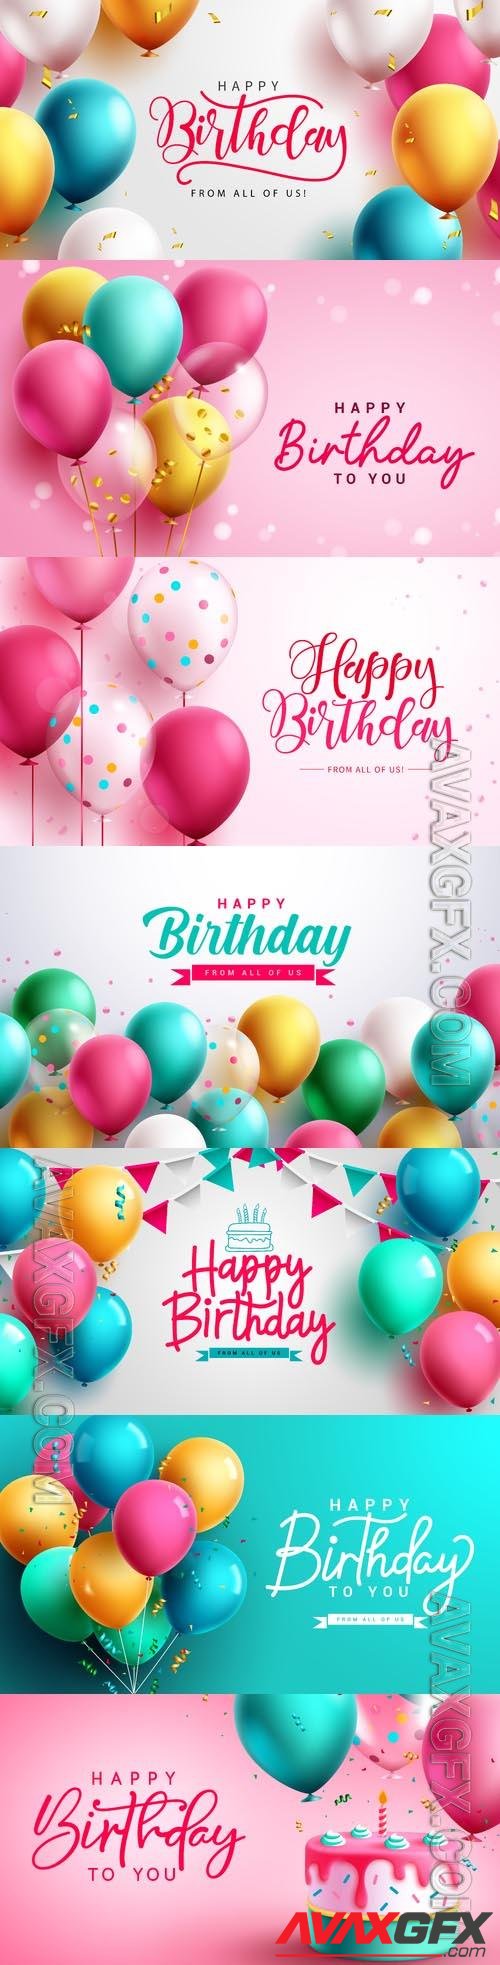 Happy birthday text vector design, birthday balloons party elements ...